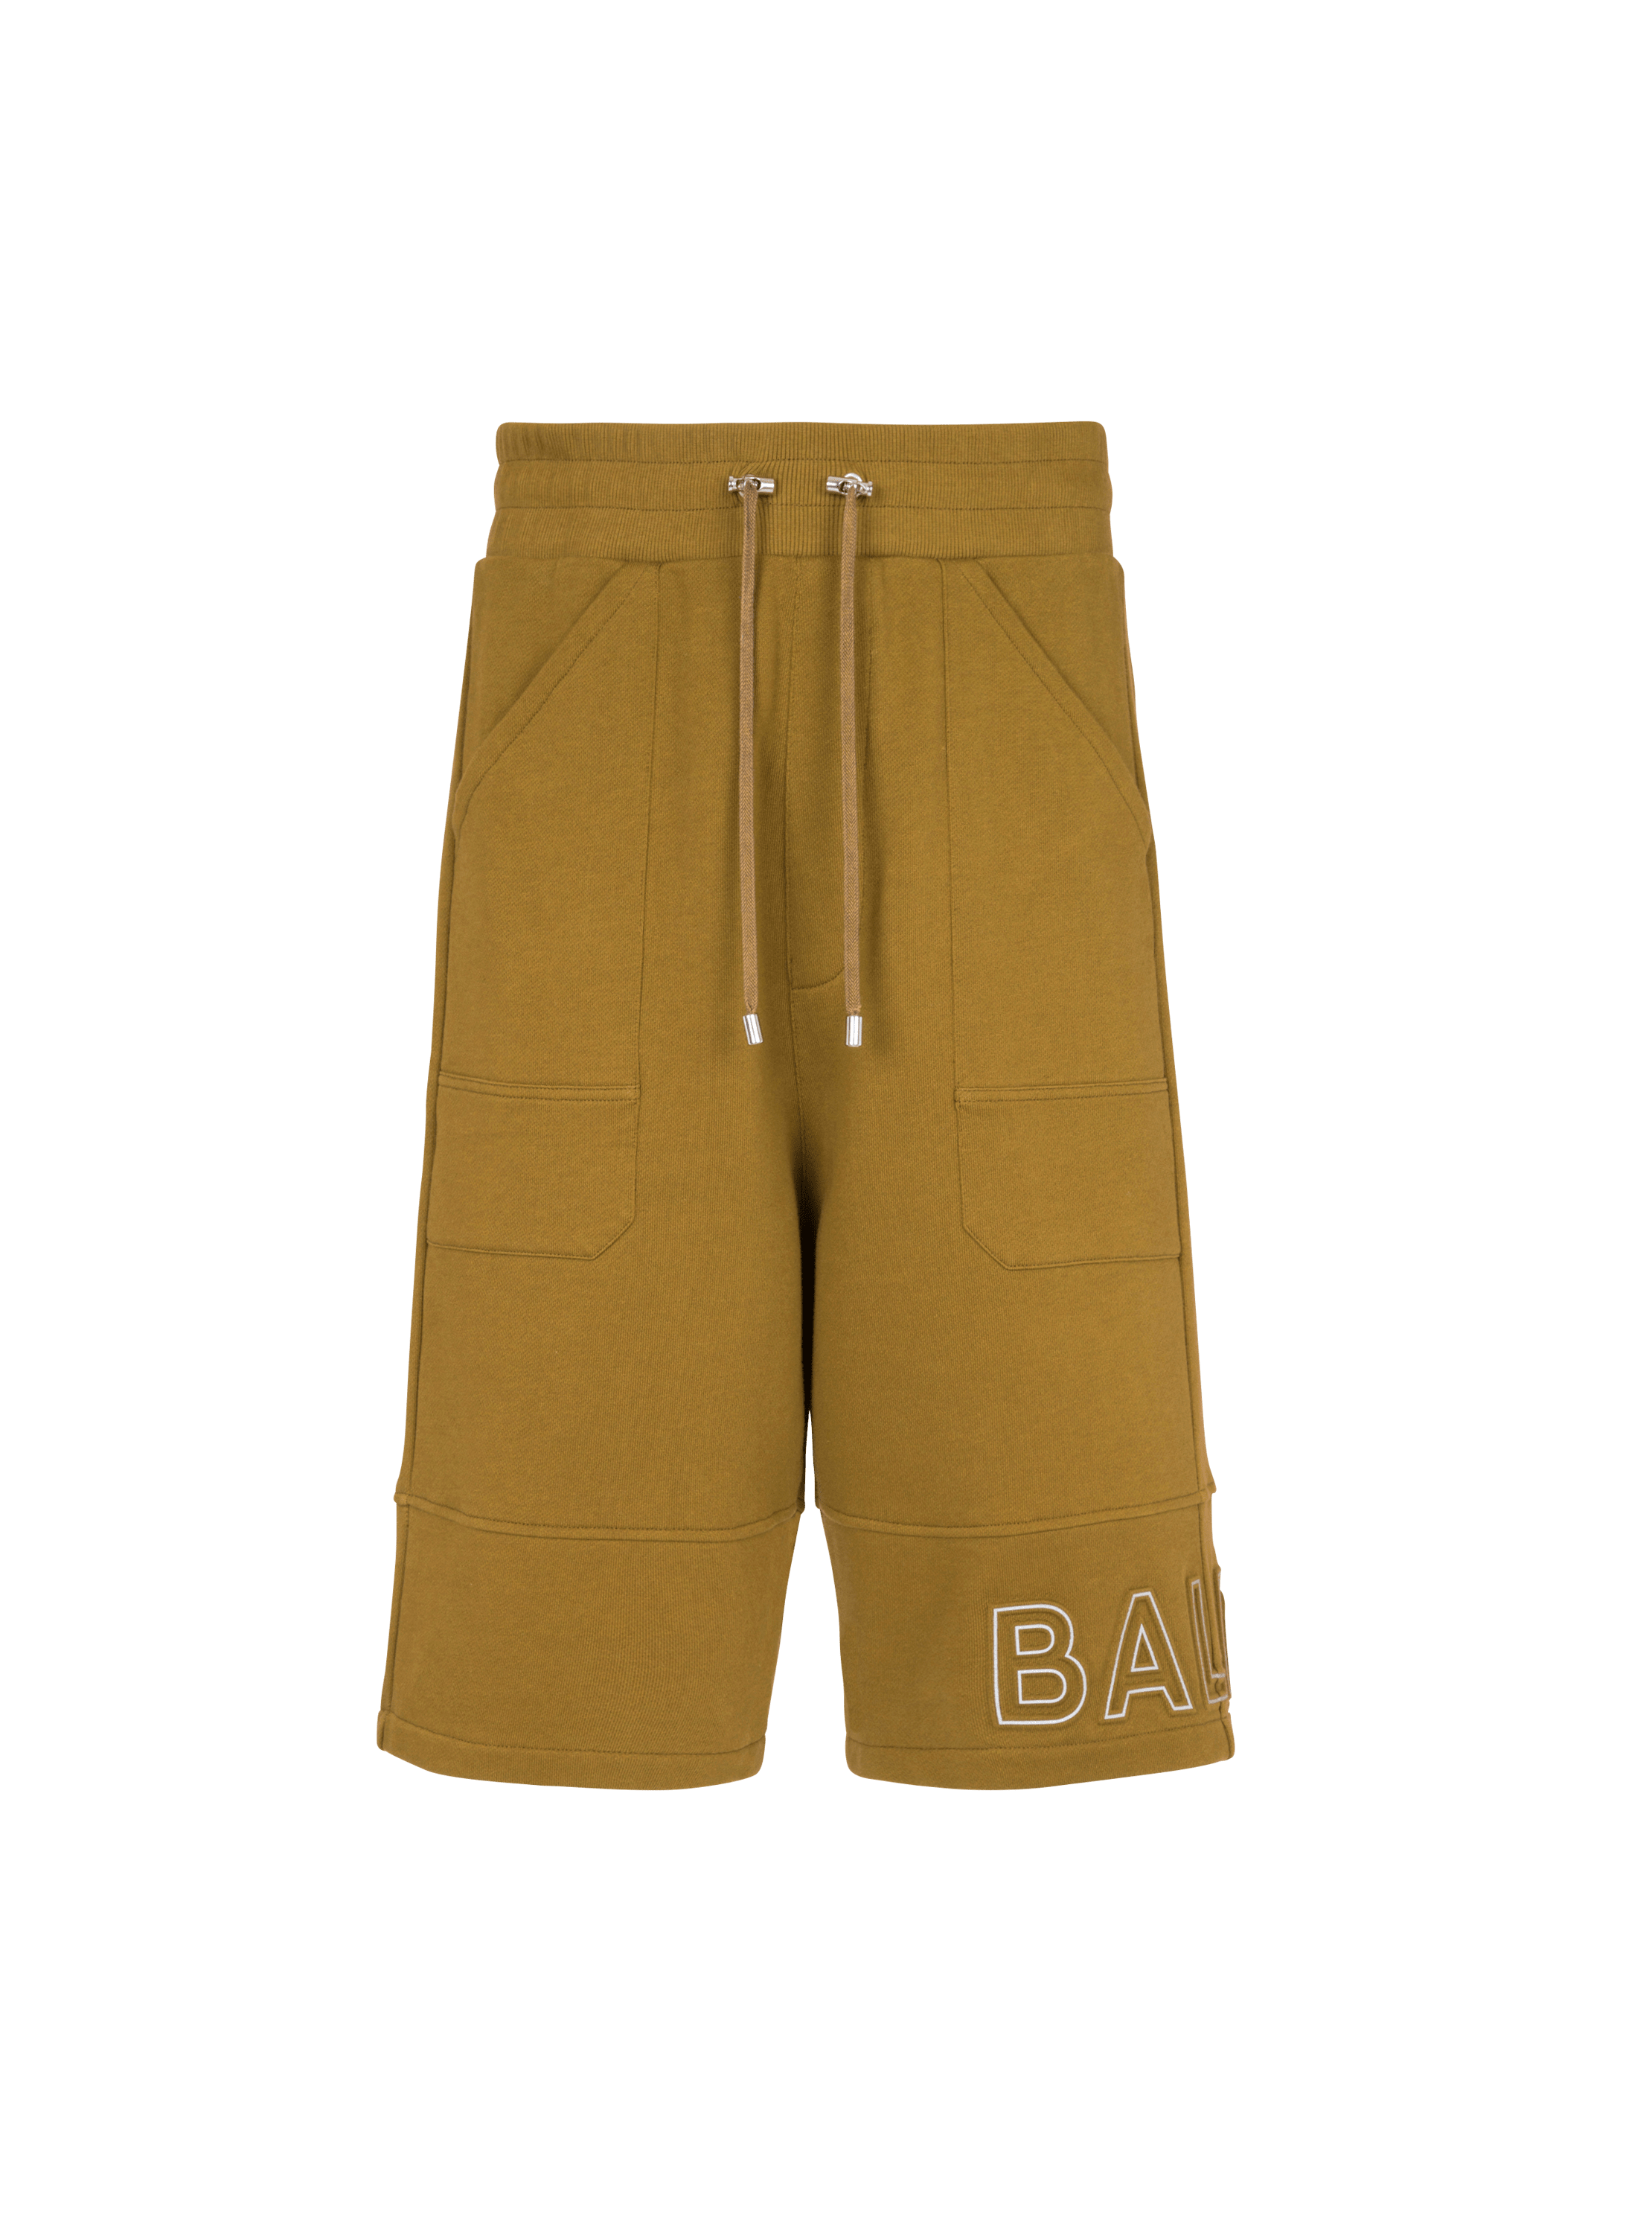 Bermuda-Shorts aus Öko-Baumwolle mit reflektierendem Balmain-Logo, khaki, hi-res